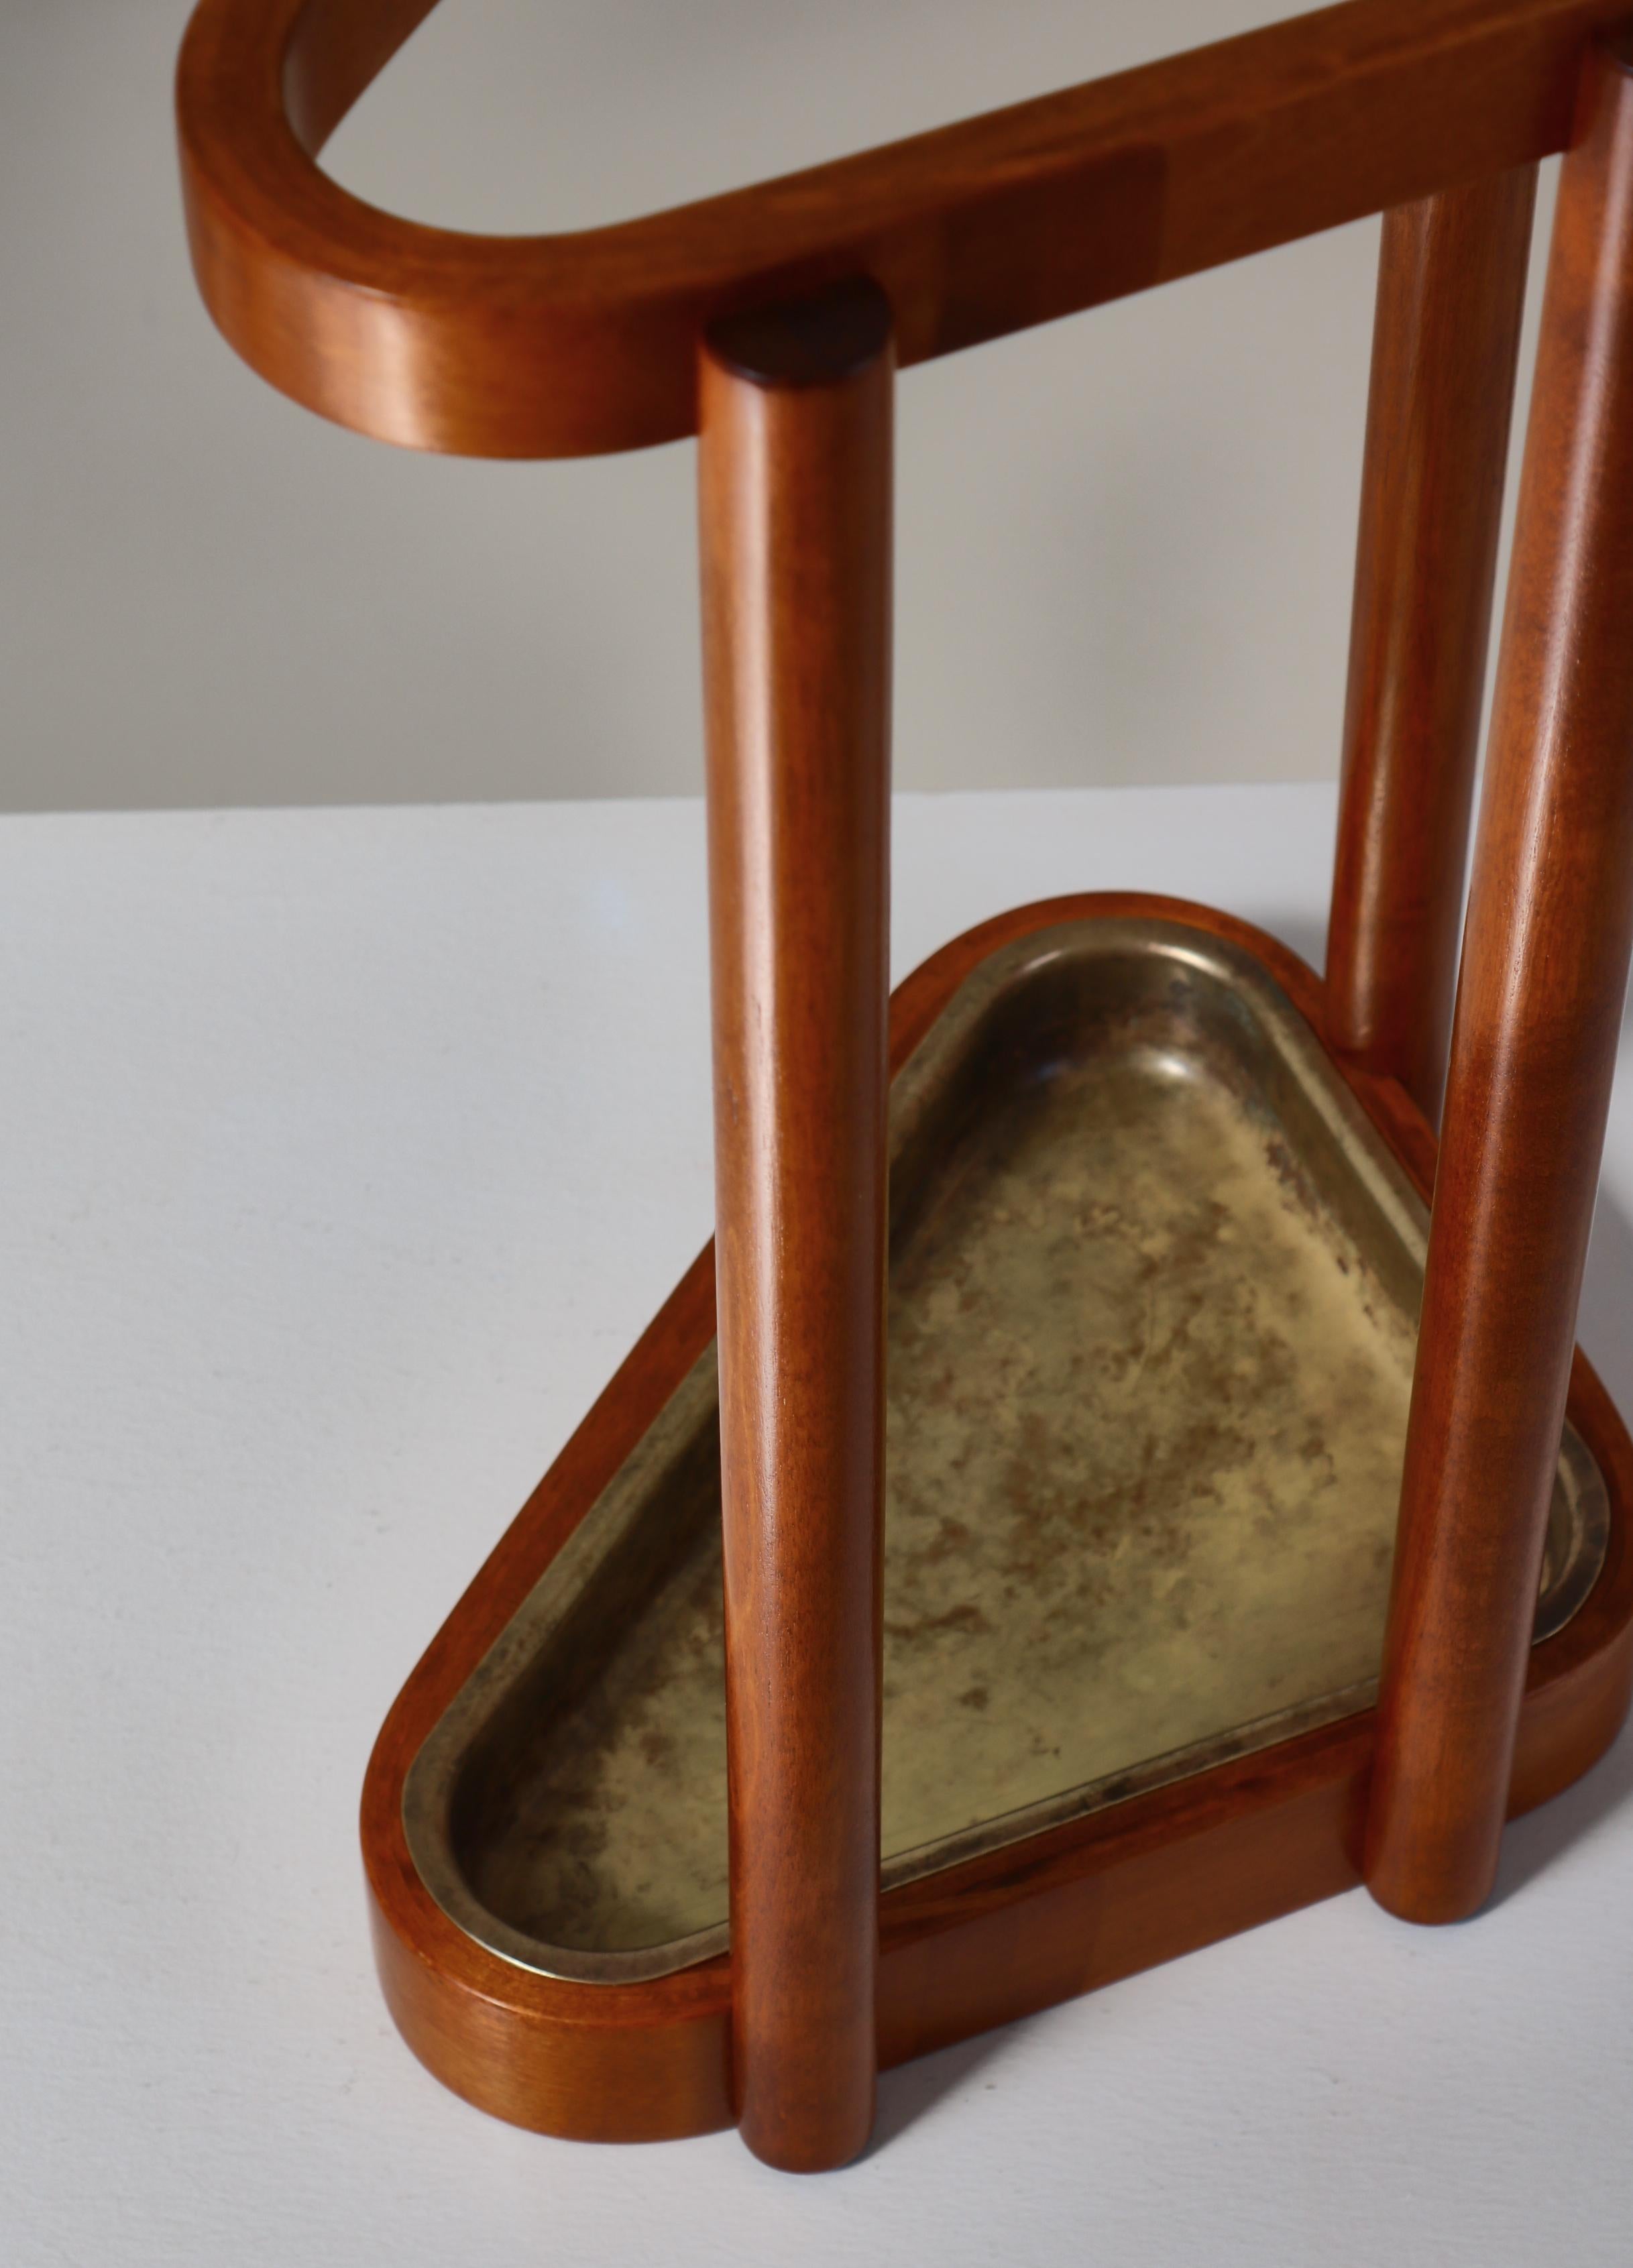 Scandinavian Modern Alvar Aalto Umbrella Stand Model no. 115 Birch & Brass 1940s For Sale 1